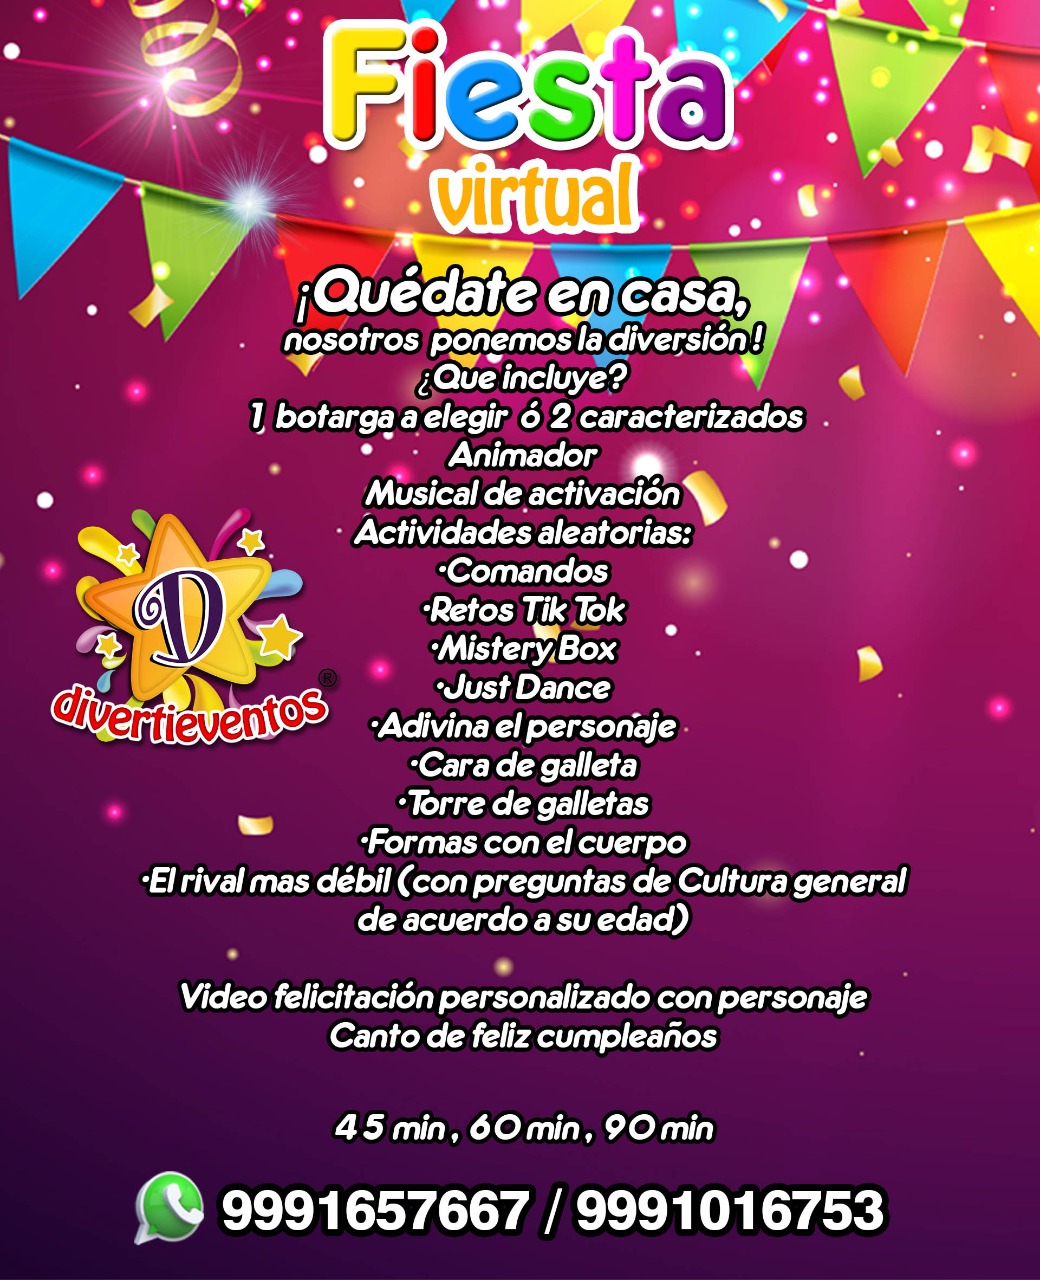 Fiesta virtual